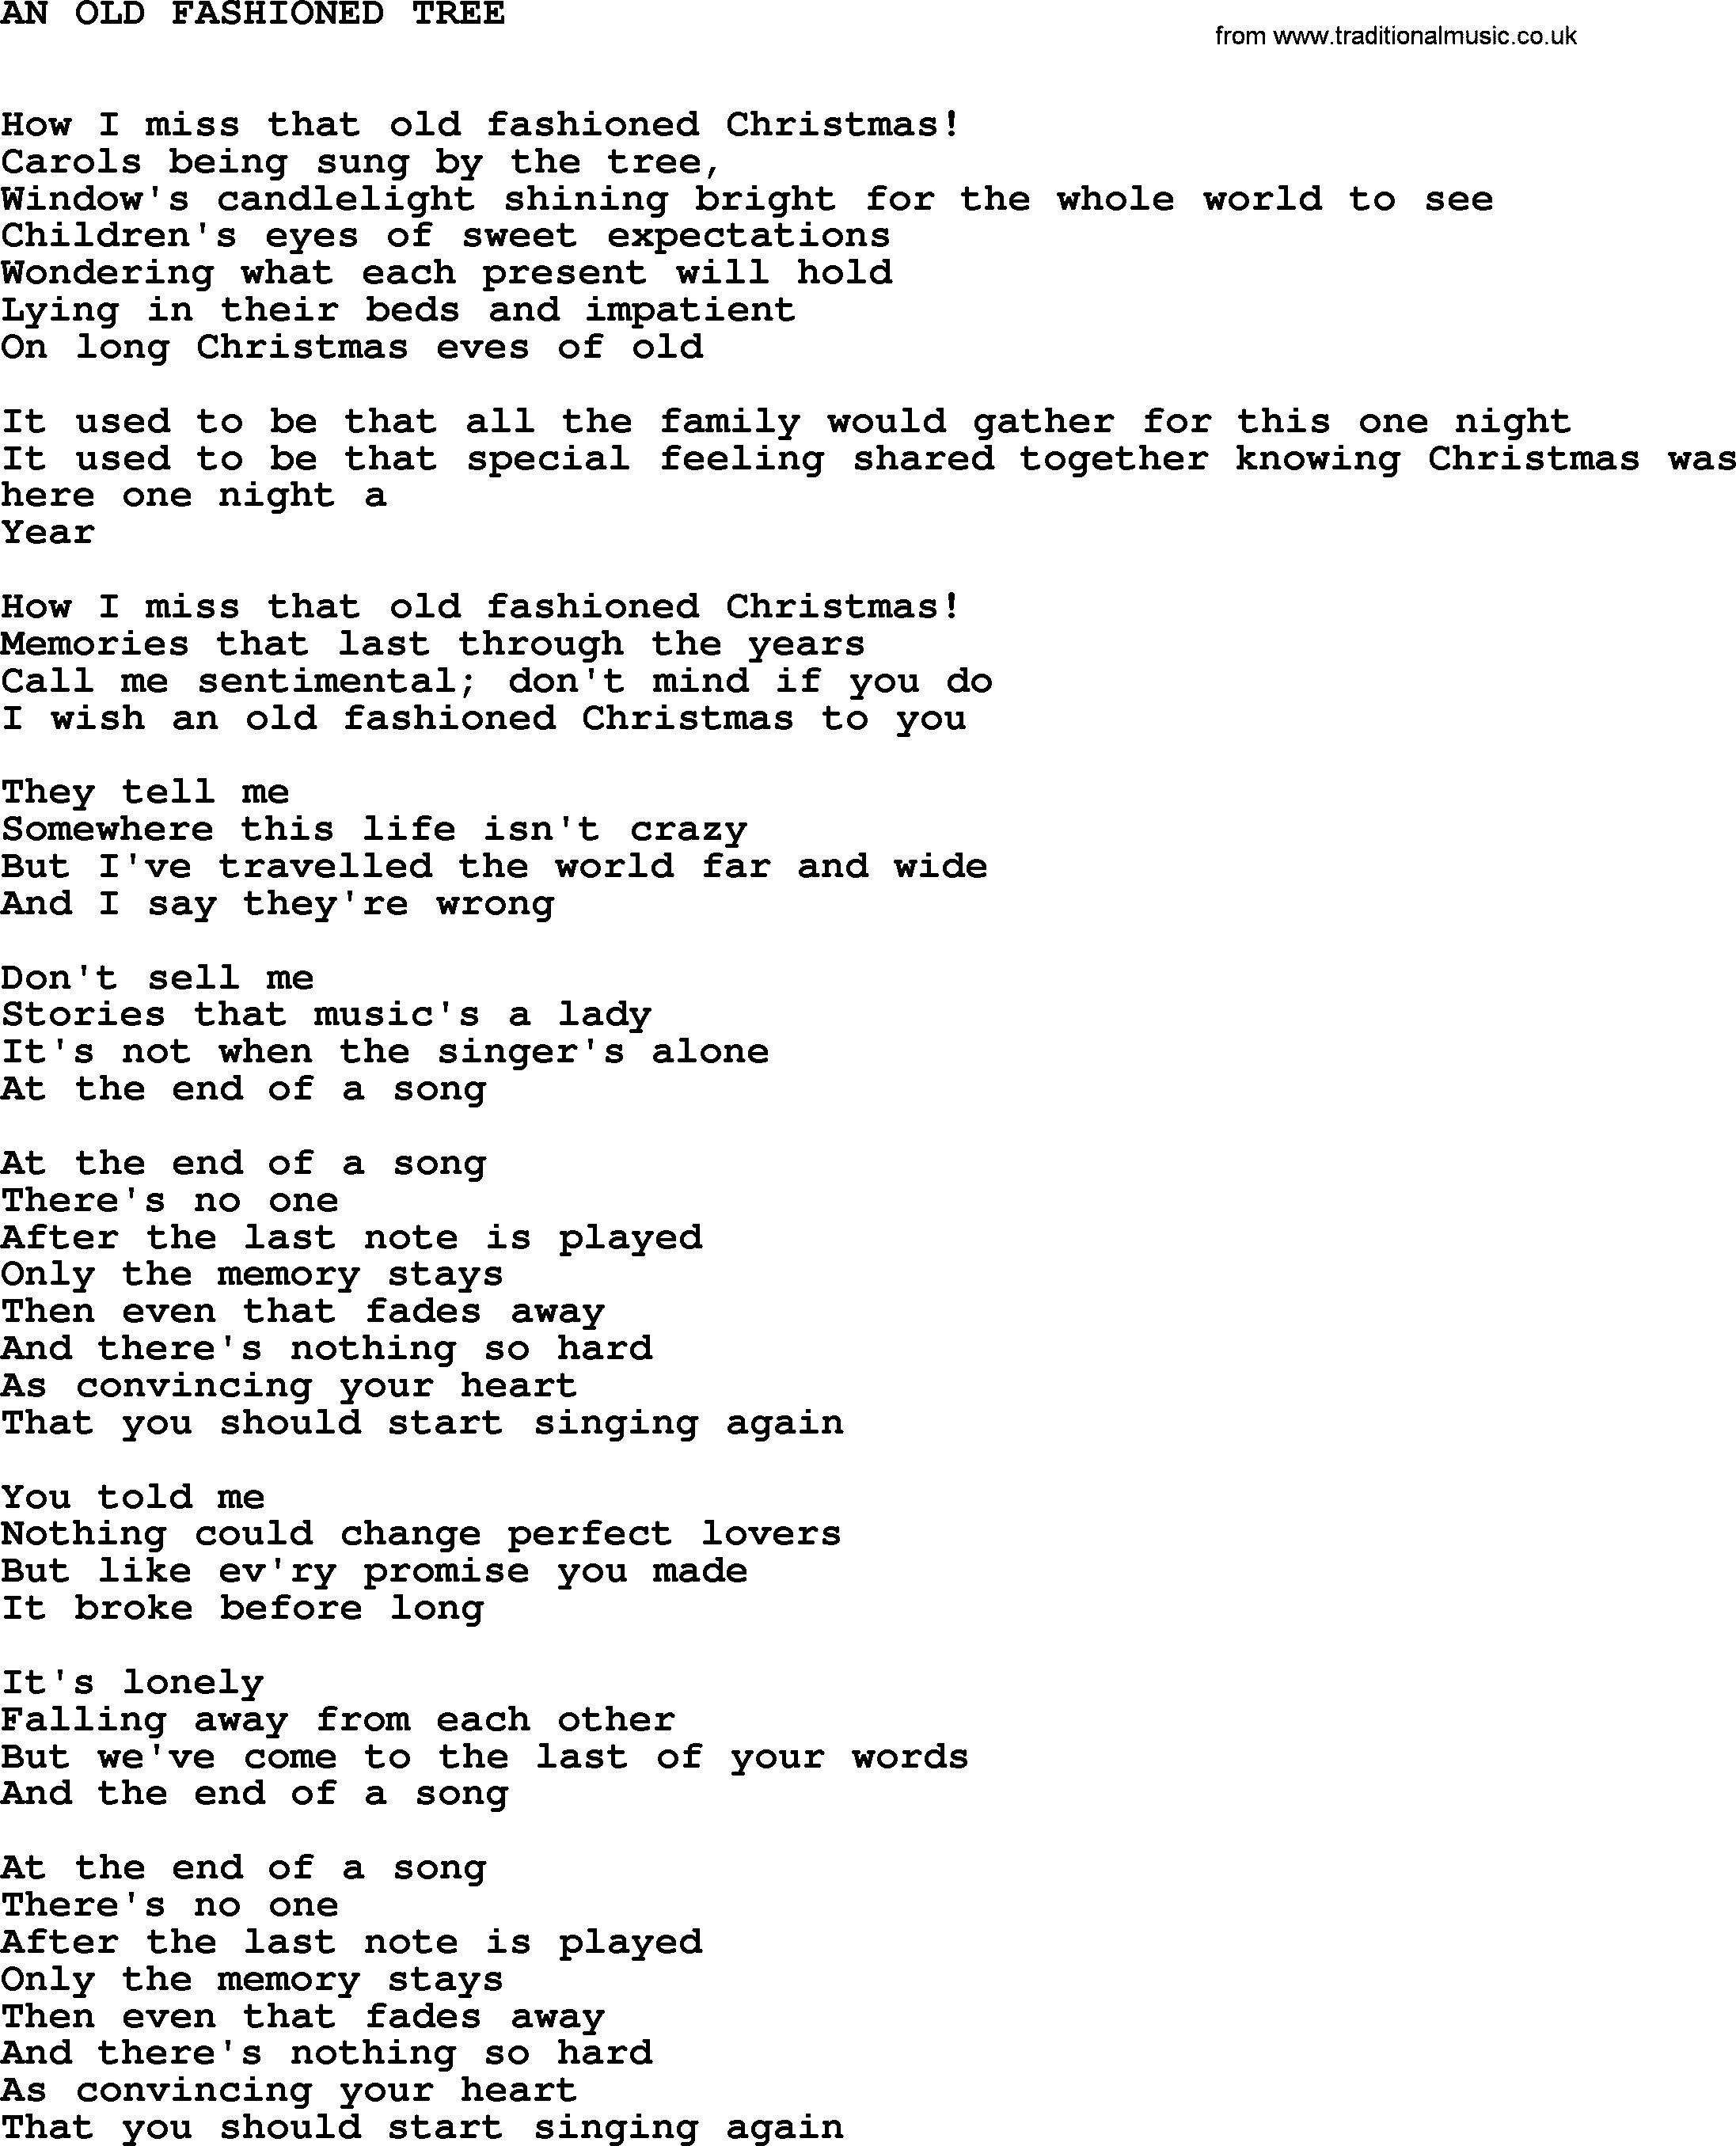 Johnny Cash song An Old Fashioned Tree.txt lyrics